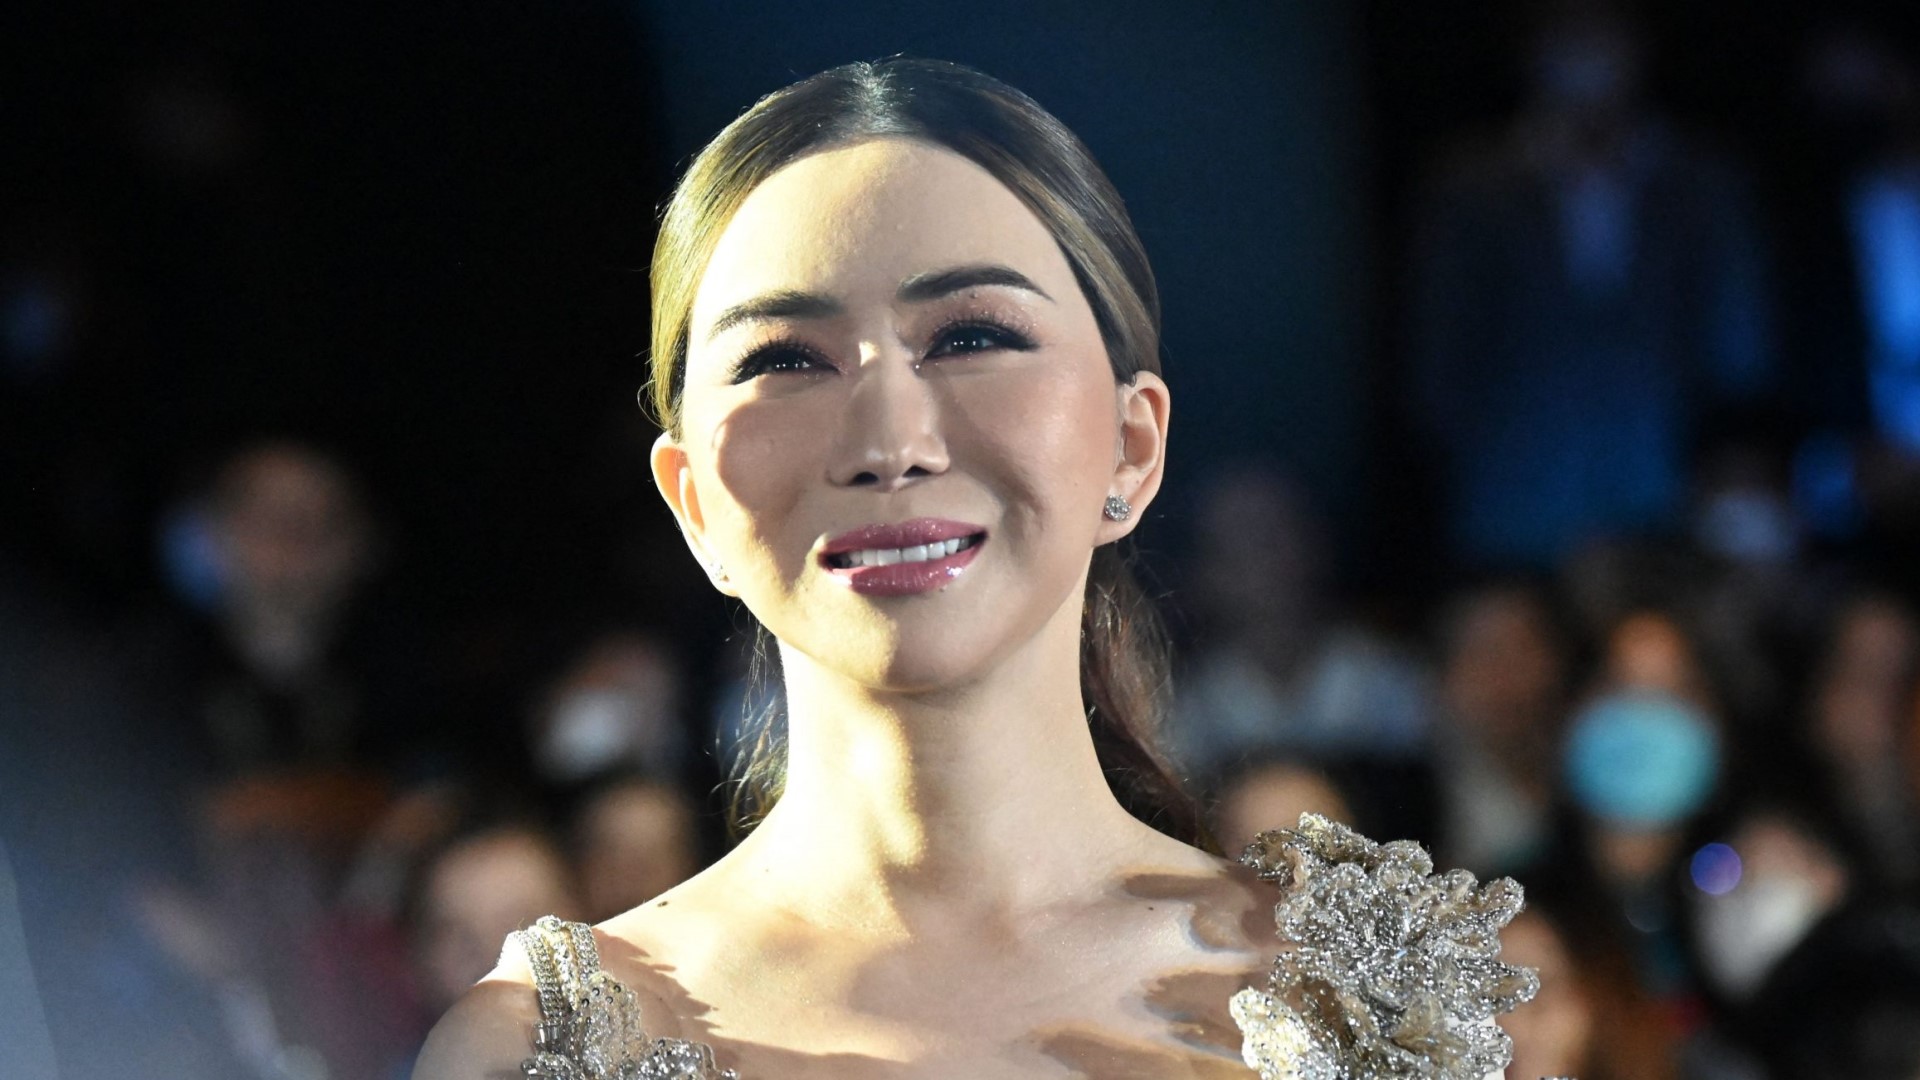 The story of Anne Jakkaphong, the transgender woman presiding over Miss Universe